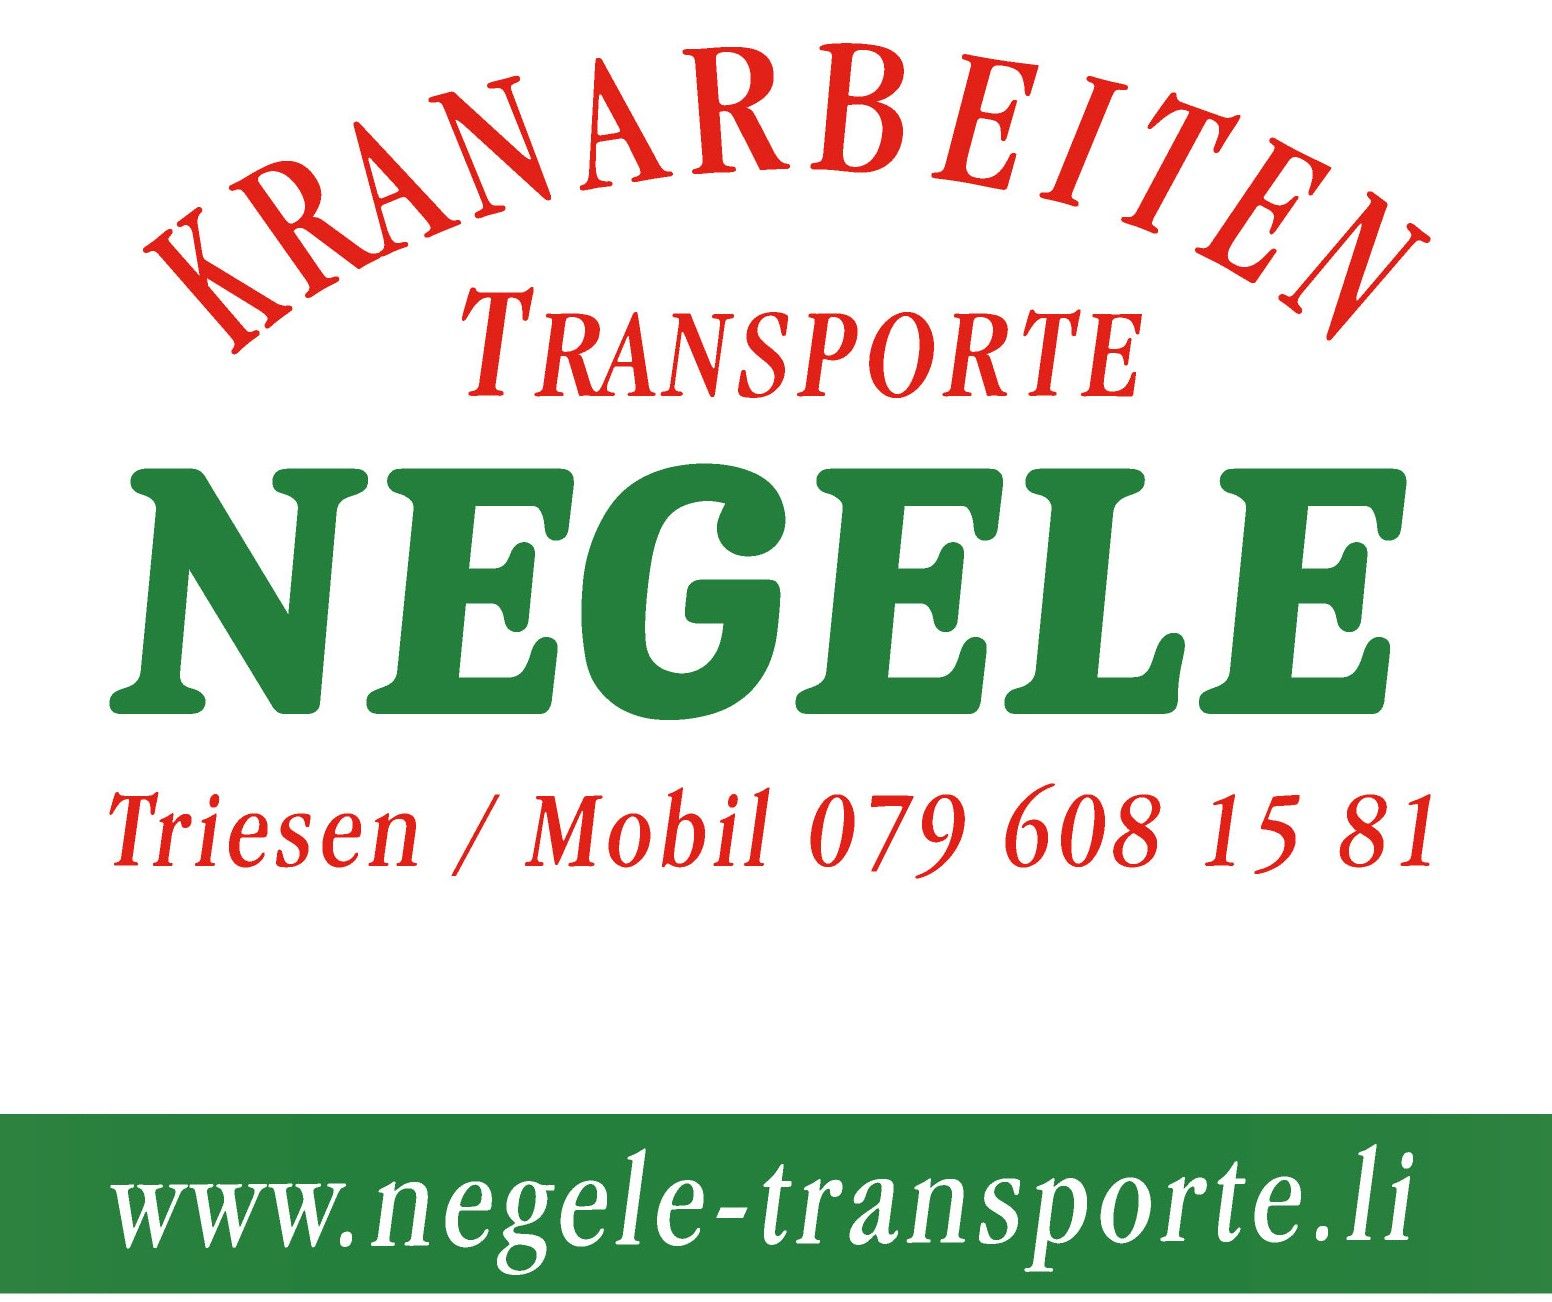 Horst Negele, Transportanstalt